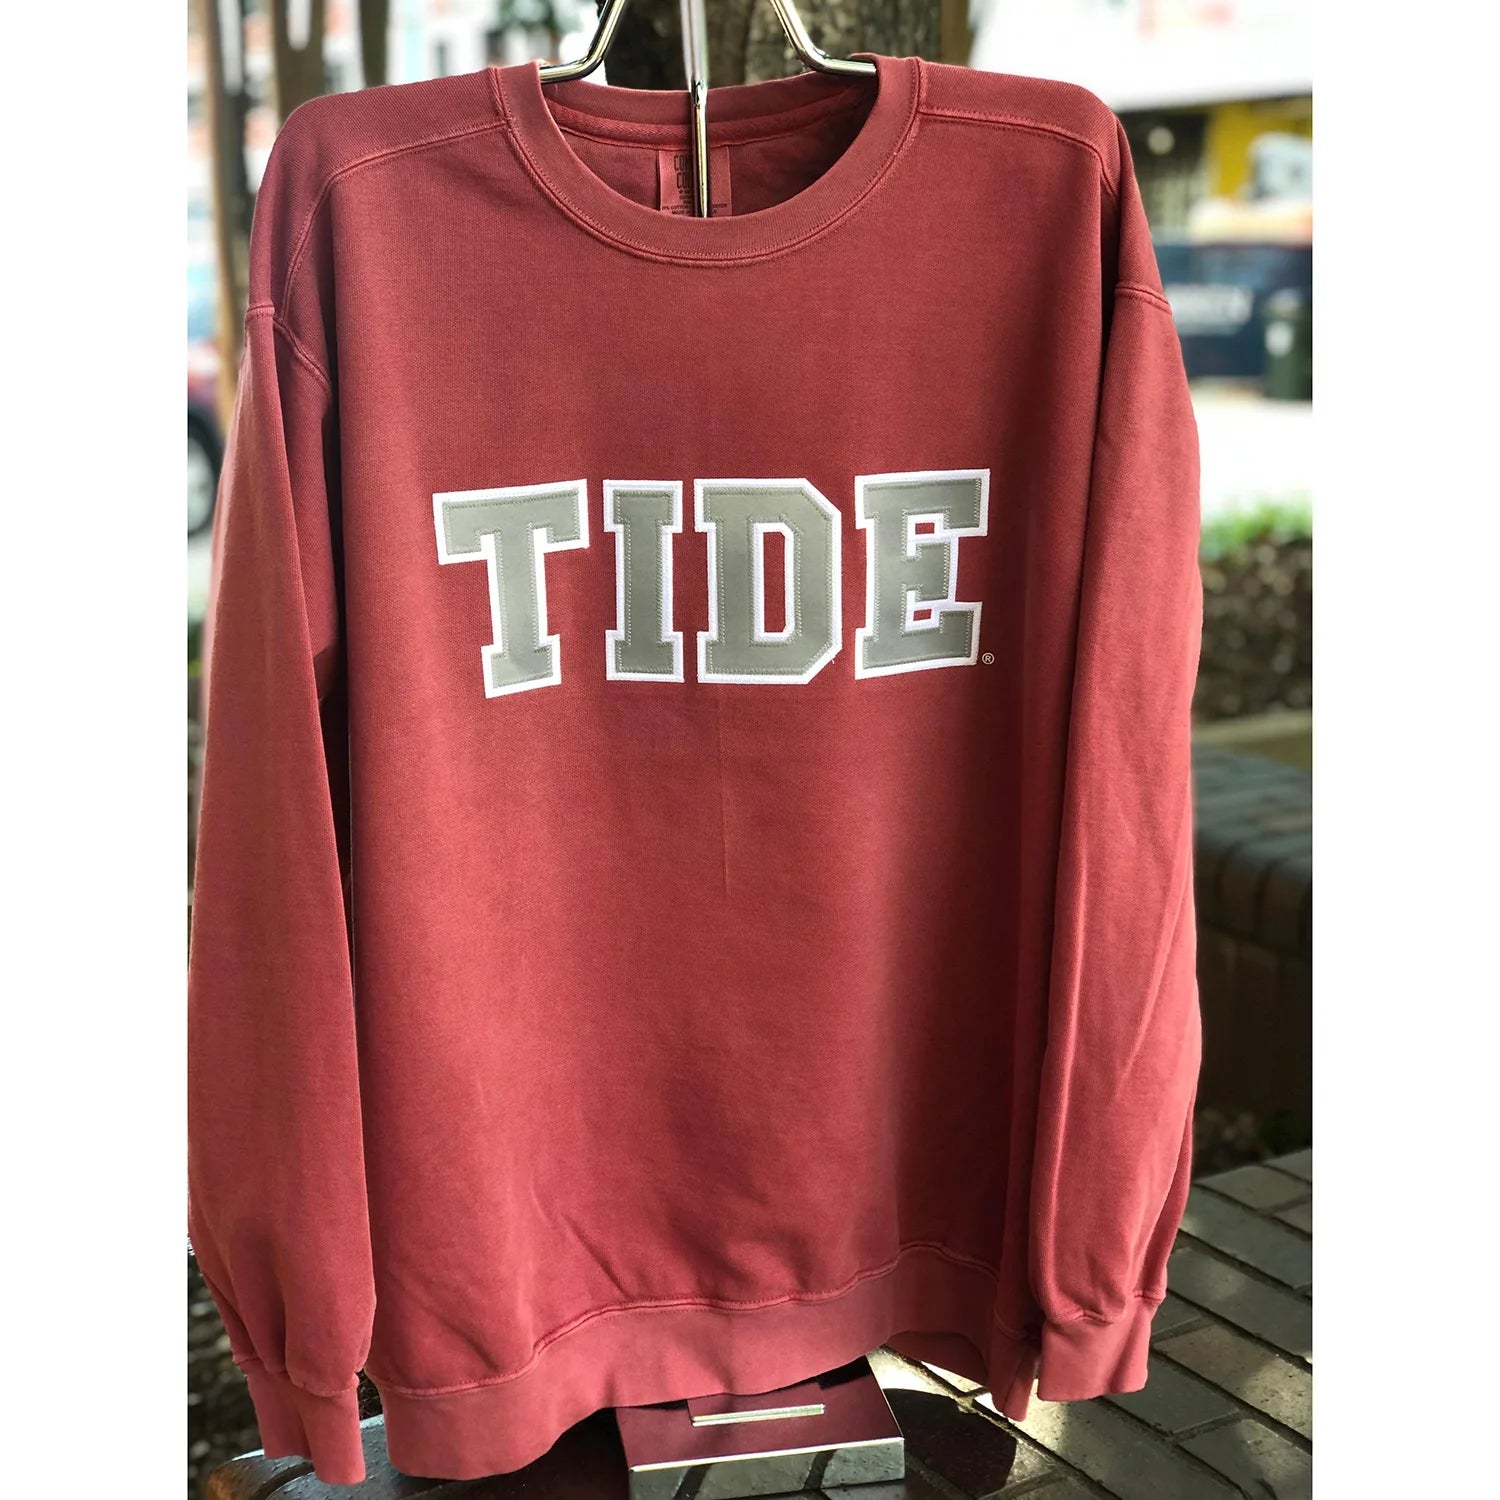 Custom Crimson Alabama Sweatshirt with TIDE across chest in applique letters